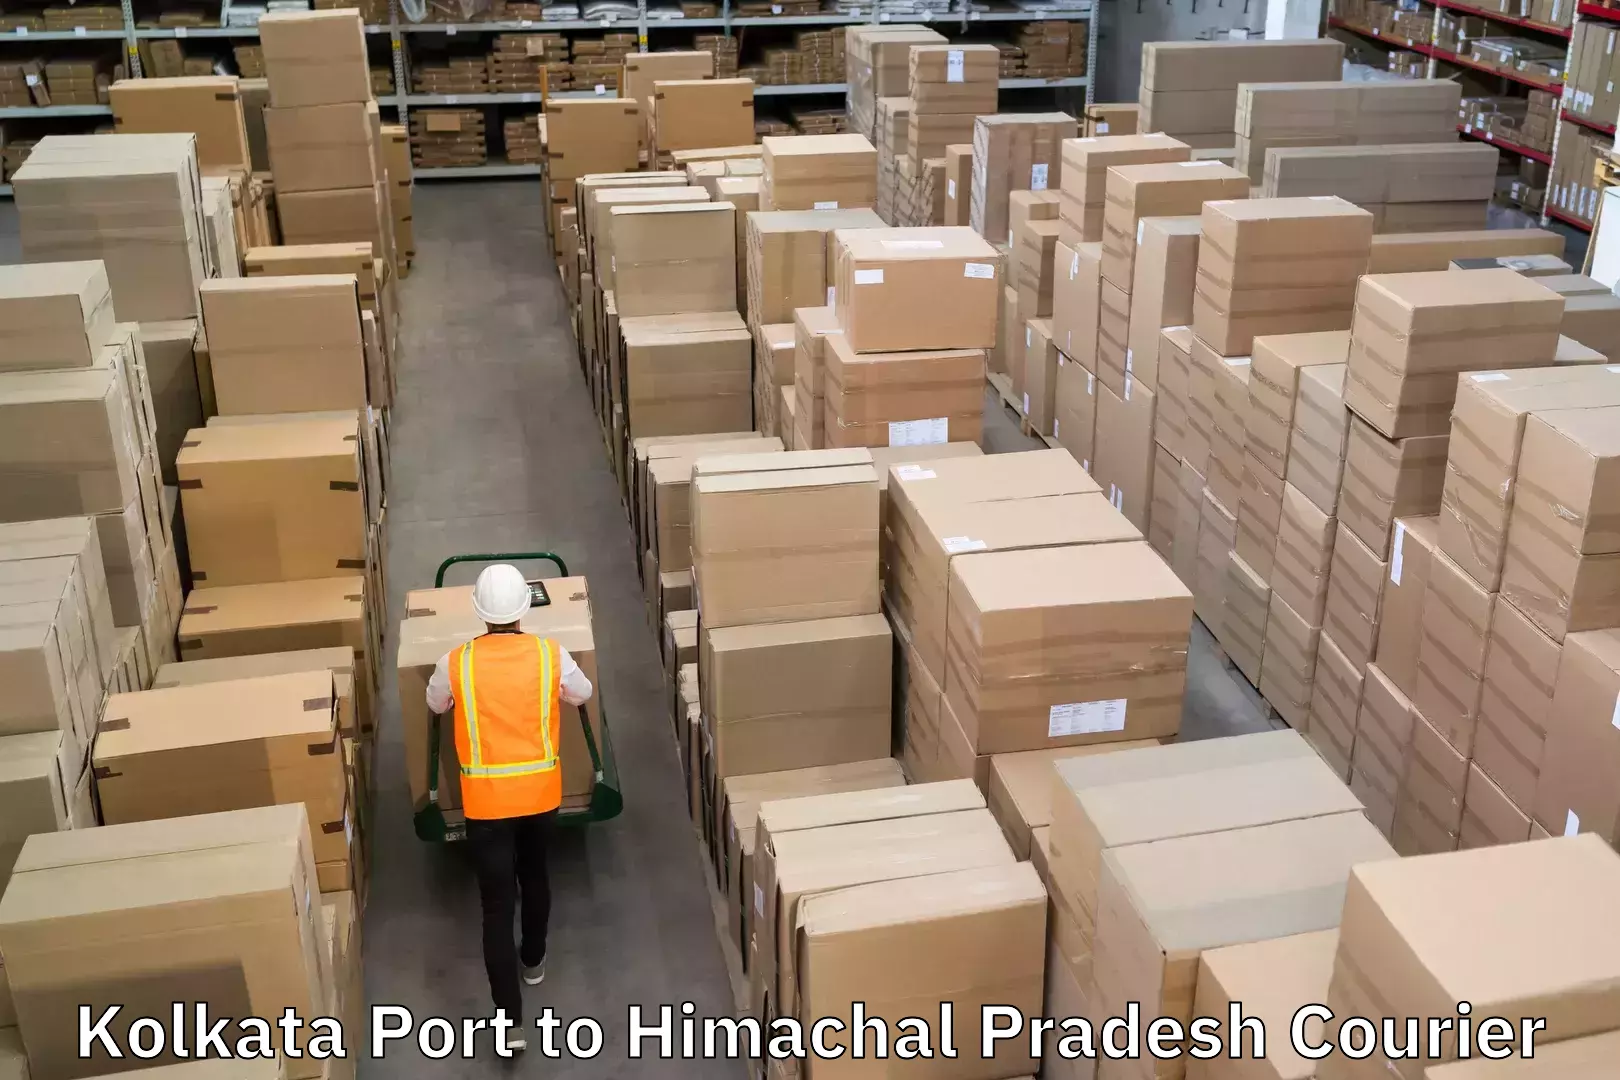 Express postal services in Kolkata Port to Himachal Pradesh